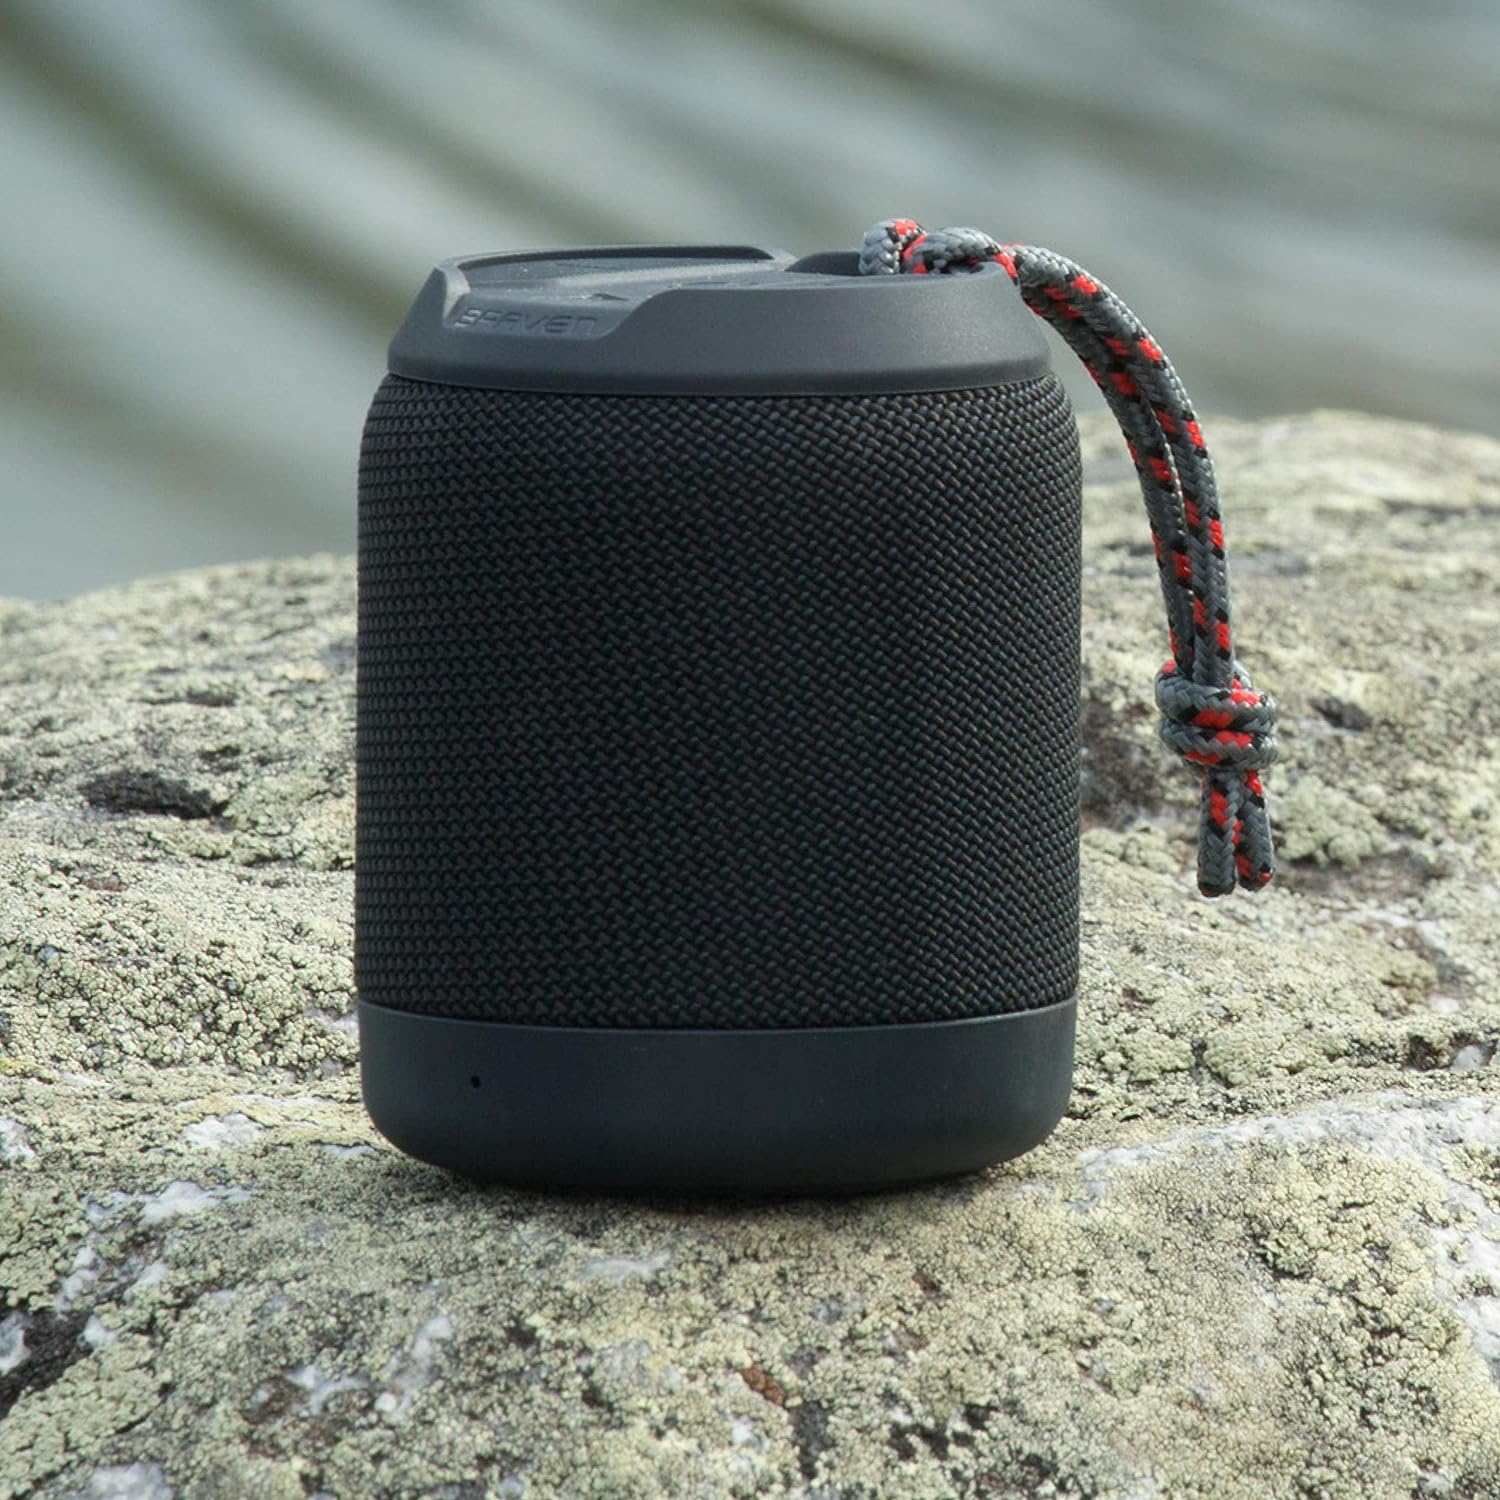 Braven BRV-MINI Portable Wireless Waterproof Speaker - Black (Certified Refurbished)